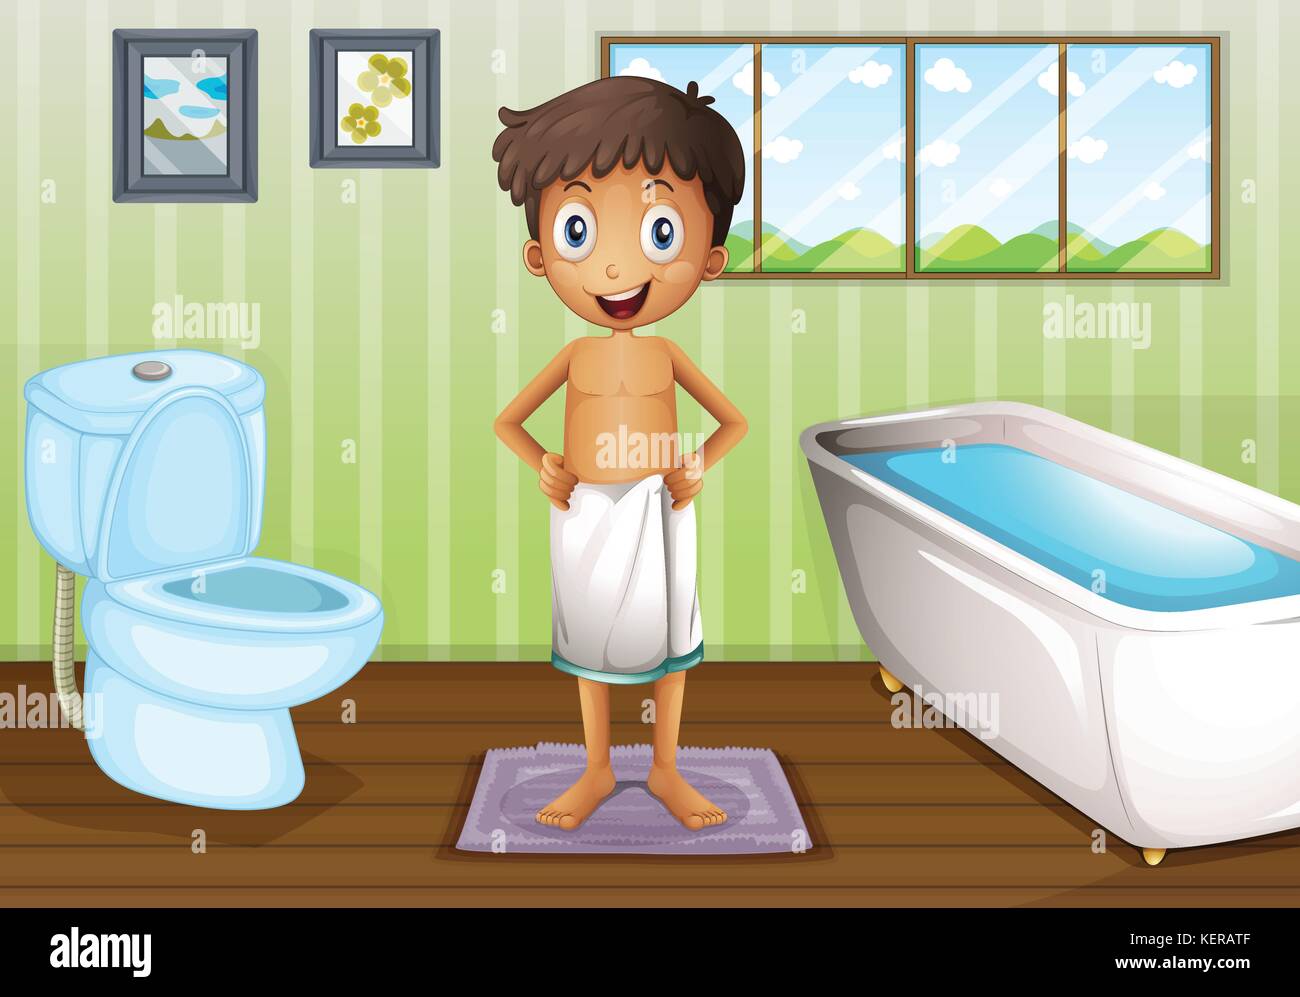 Illustration of a boy inside the bathroom Stock Vector